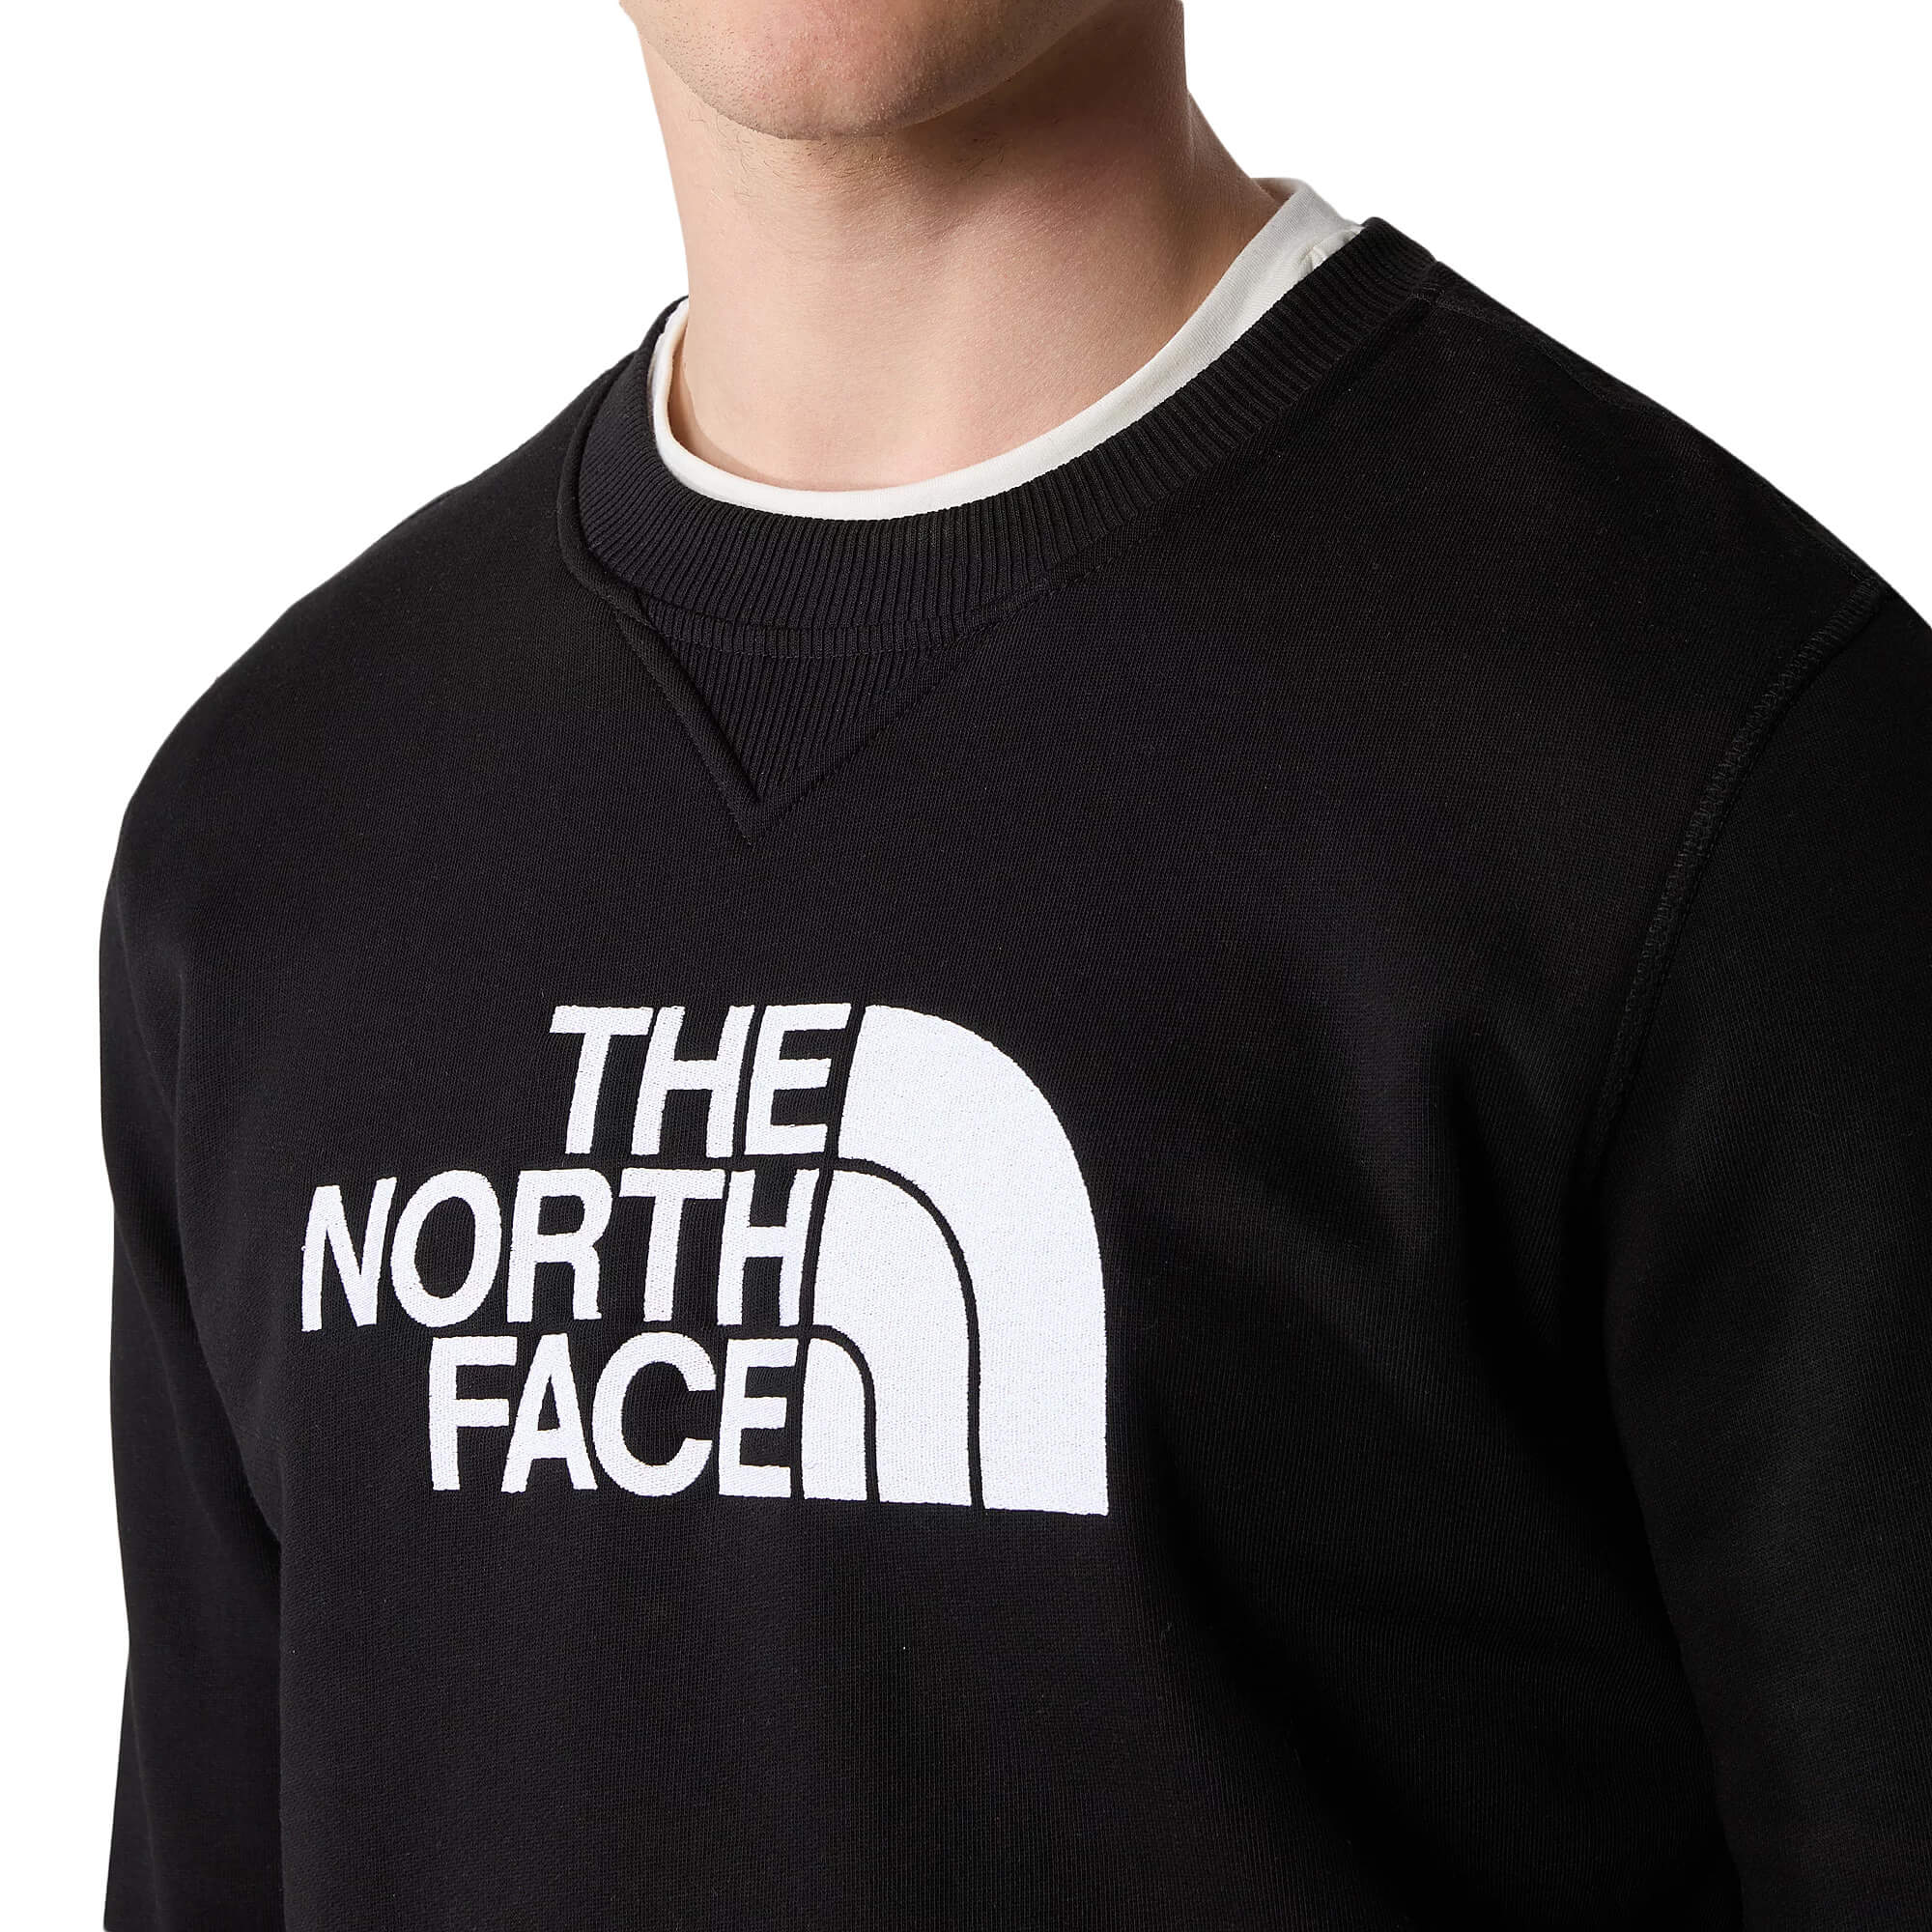 The North Face Drew Peak Crew Neck Pullover Sweater